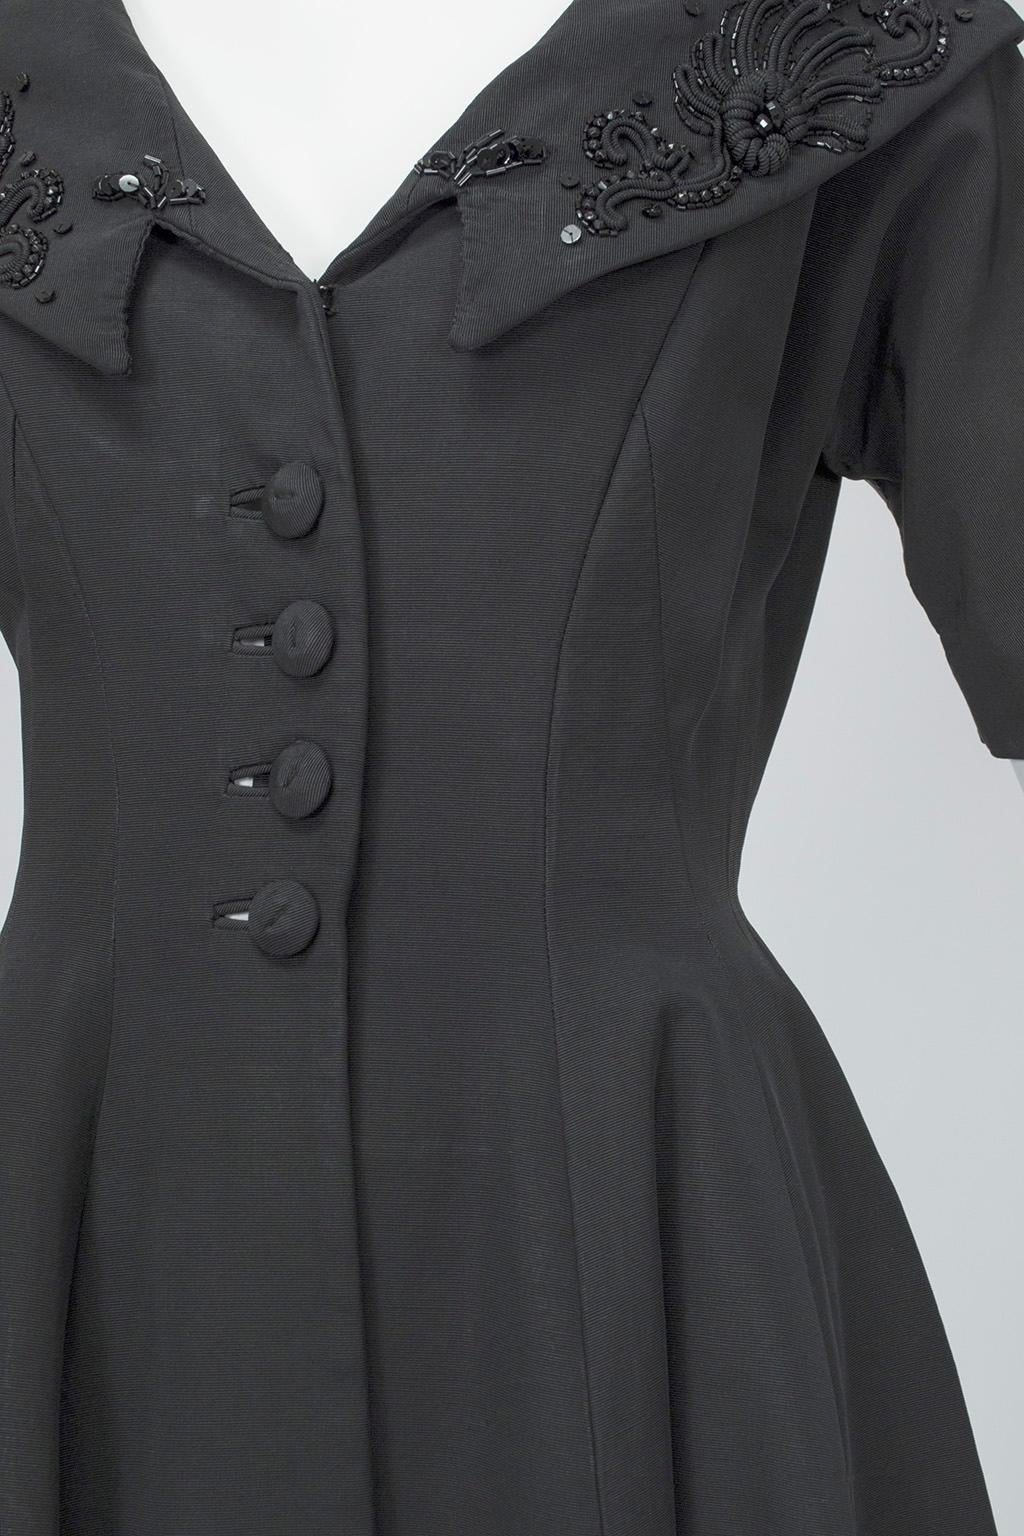 New Look Black Heavyweight Faille Beaded Portrait Collar Coat Dress - S, 1950s For Sale 1